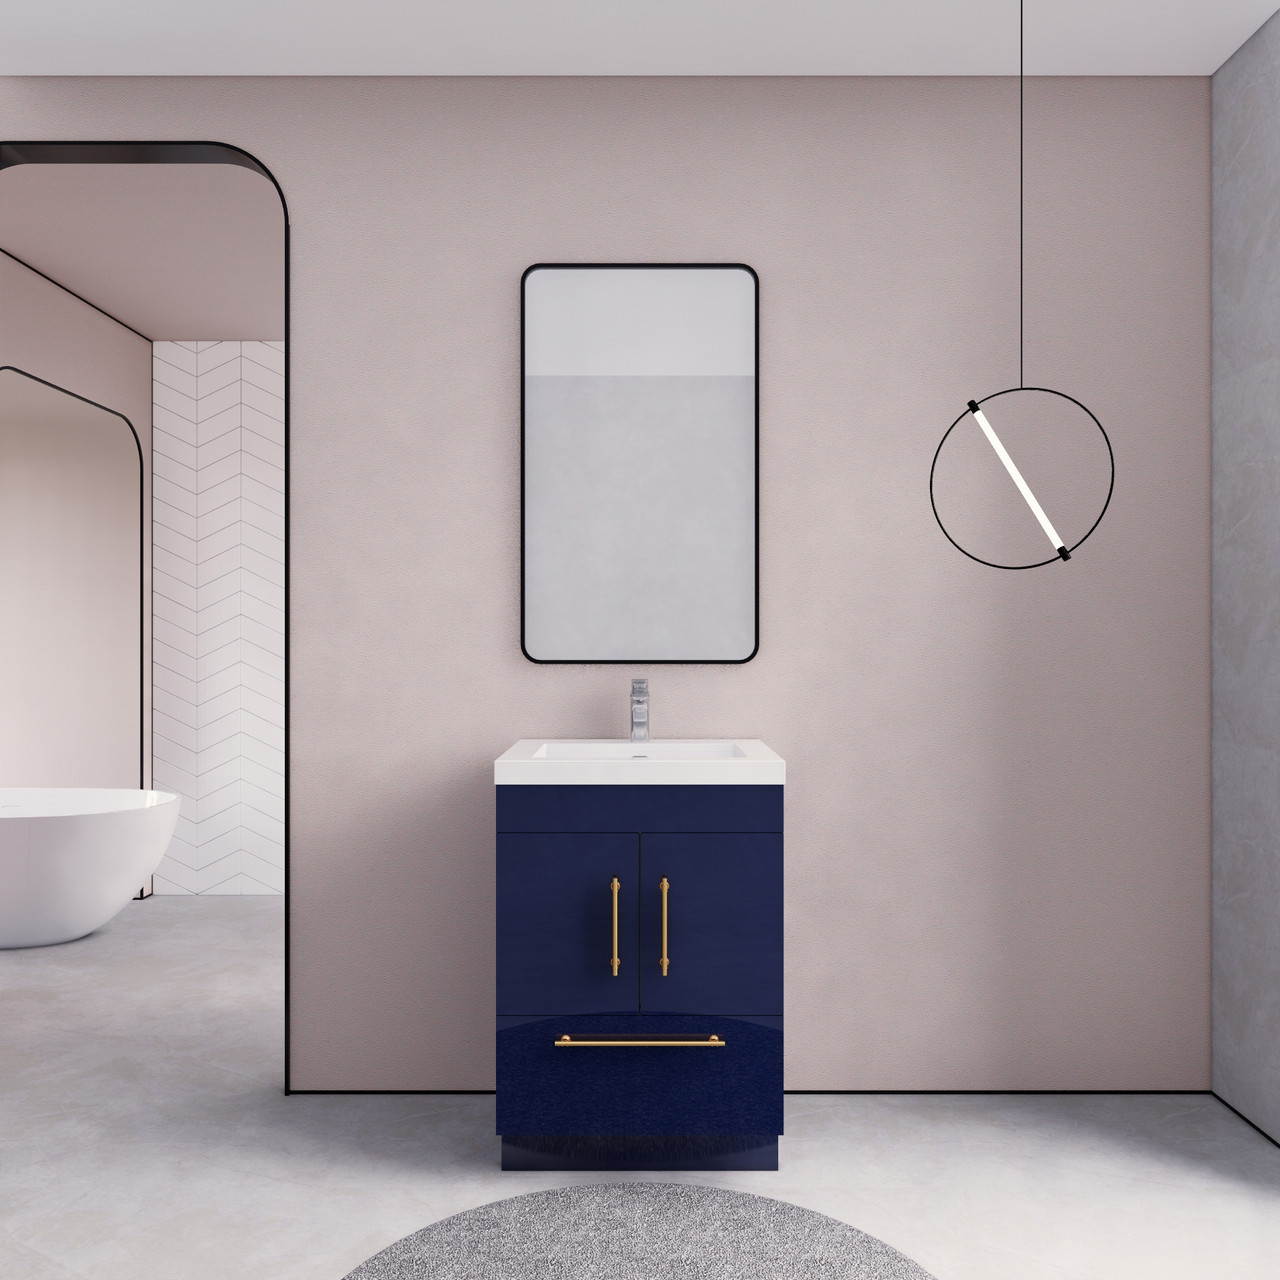 Custom Navy Blue bathroom Vanity with Brass Hardware